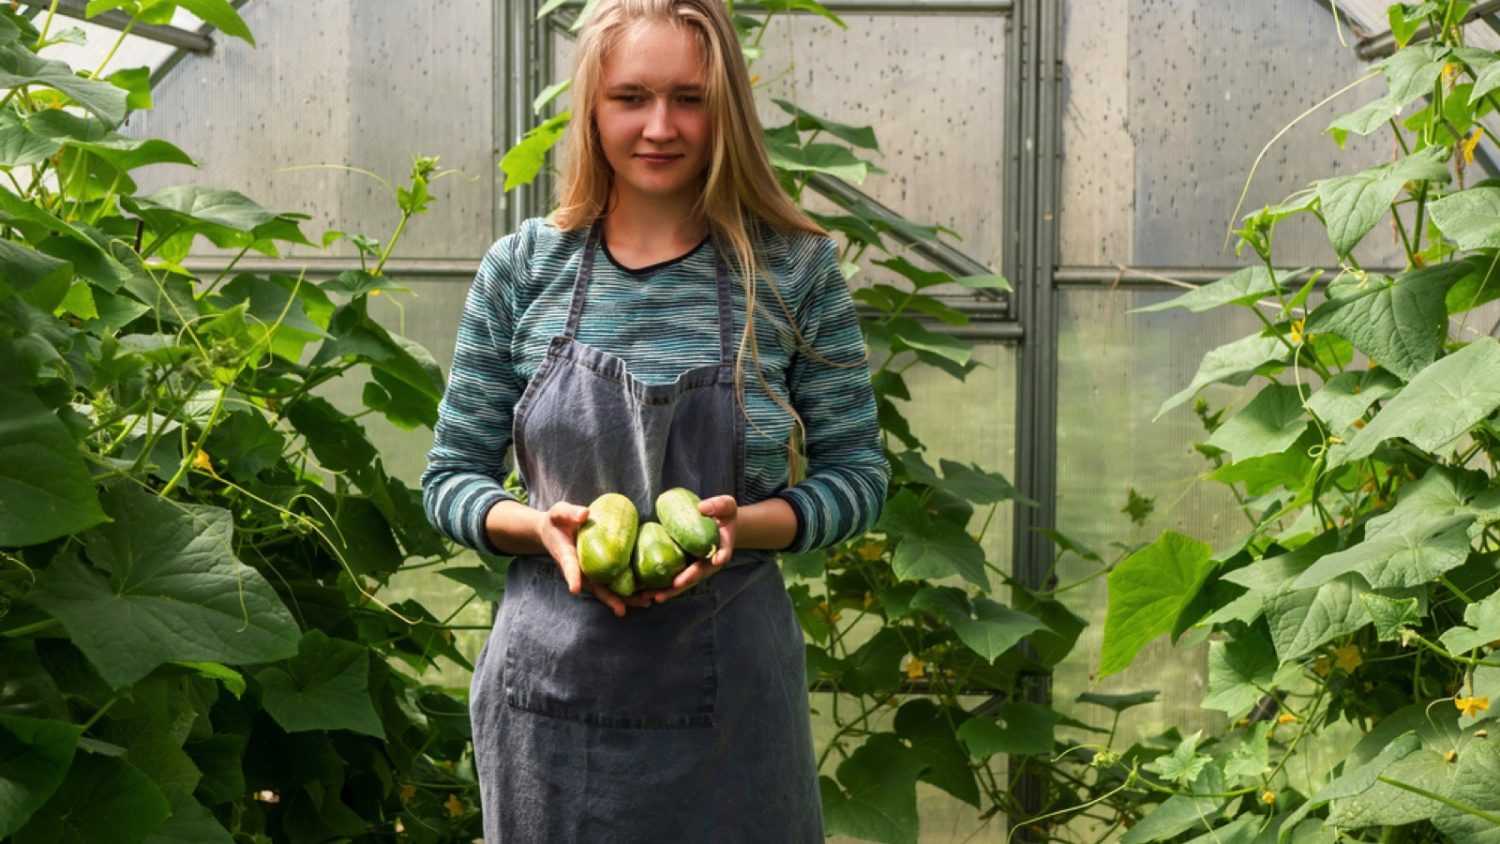 Woman in apron picks cucumber in greenhouse